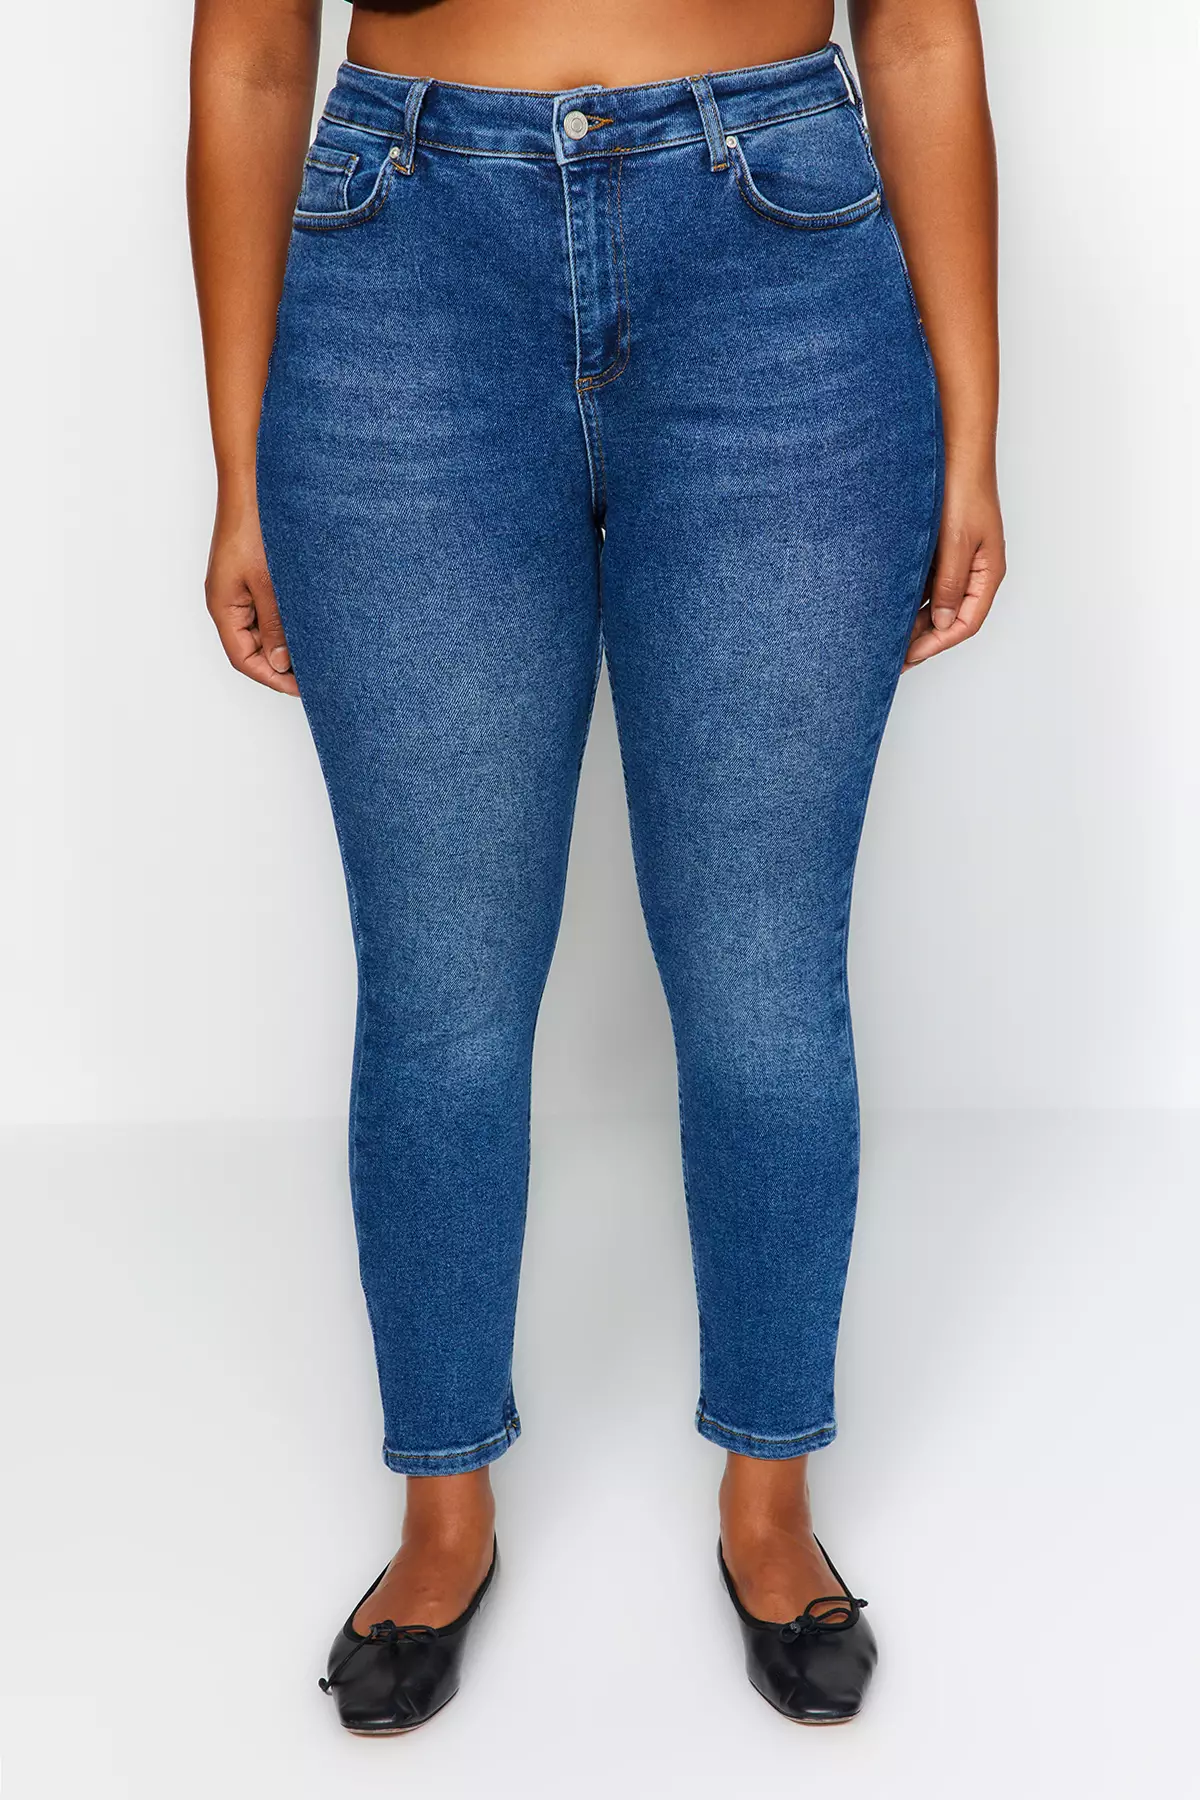 Apt 9 Jeans Womens 8 Blue Denim Curvy Straight Slimming Tummy Waistband  Pants - Helia Beer Co